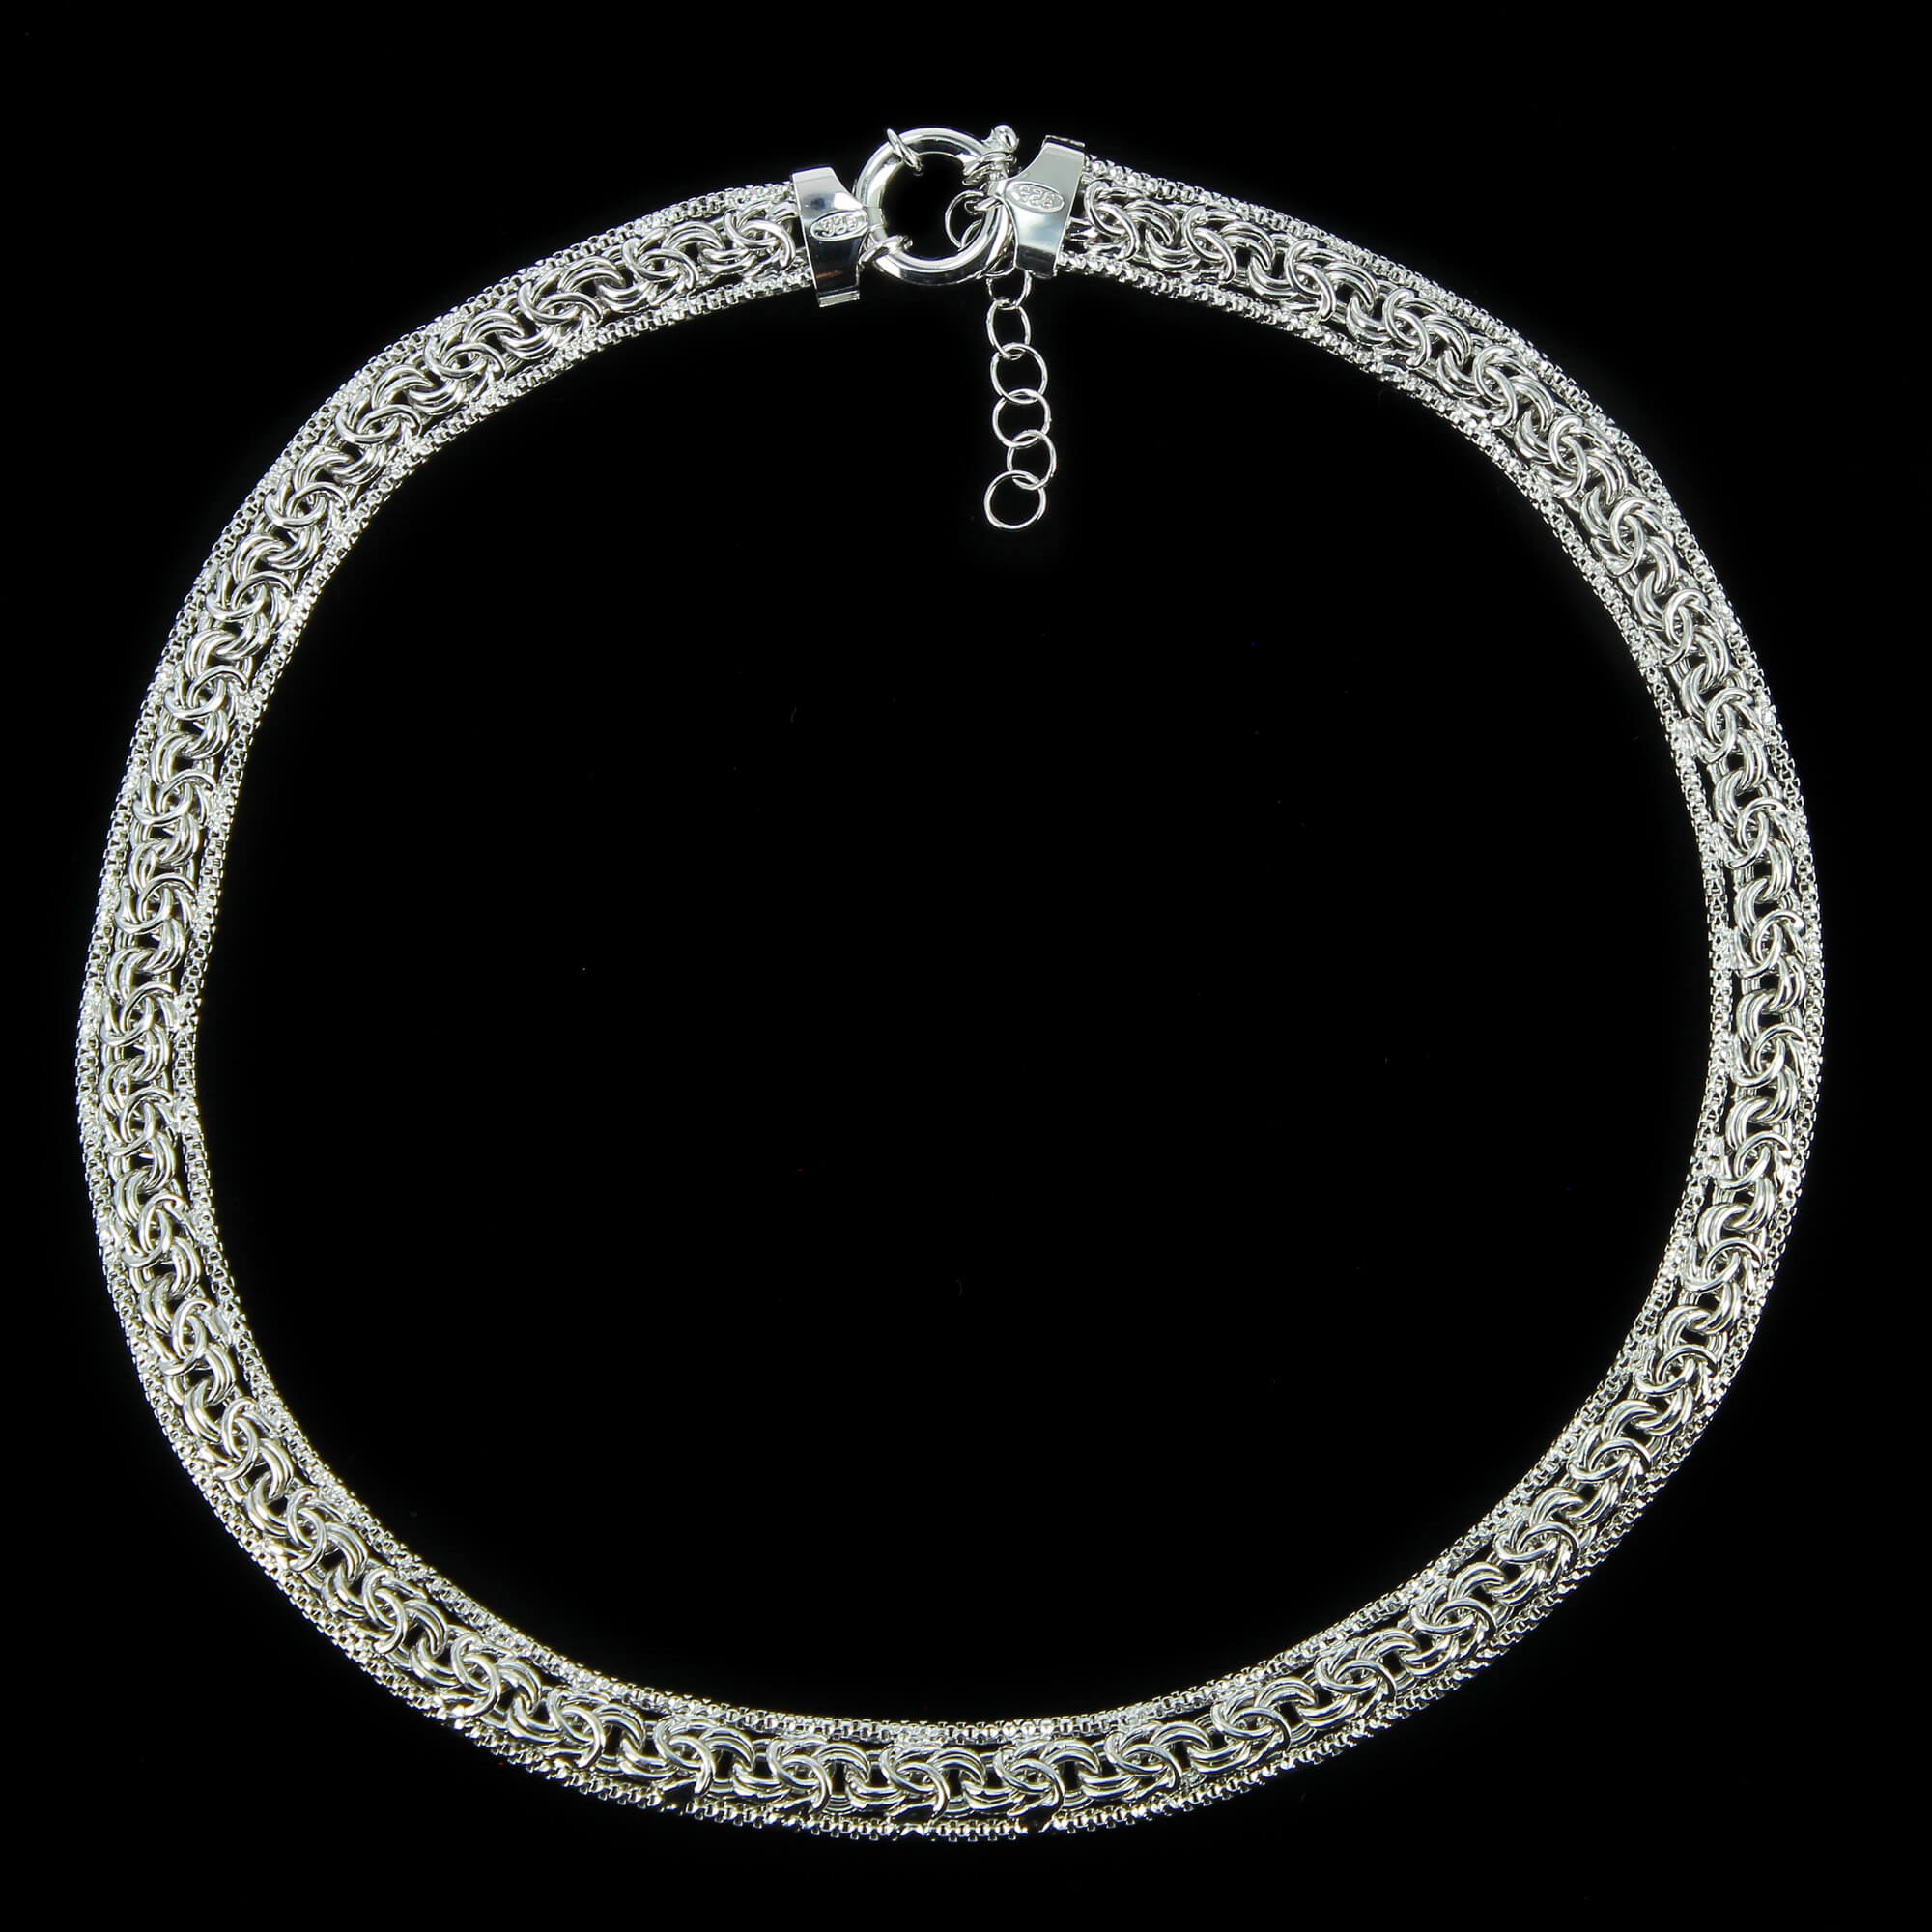 Ornate silver royal chain